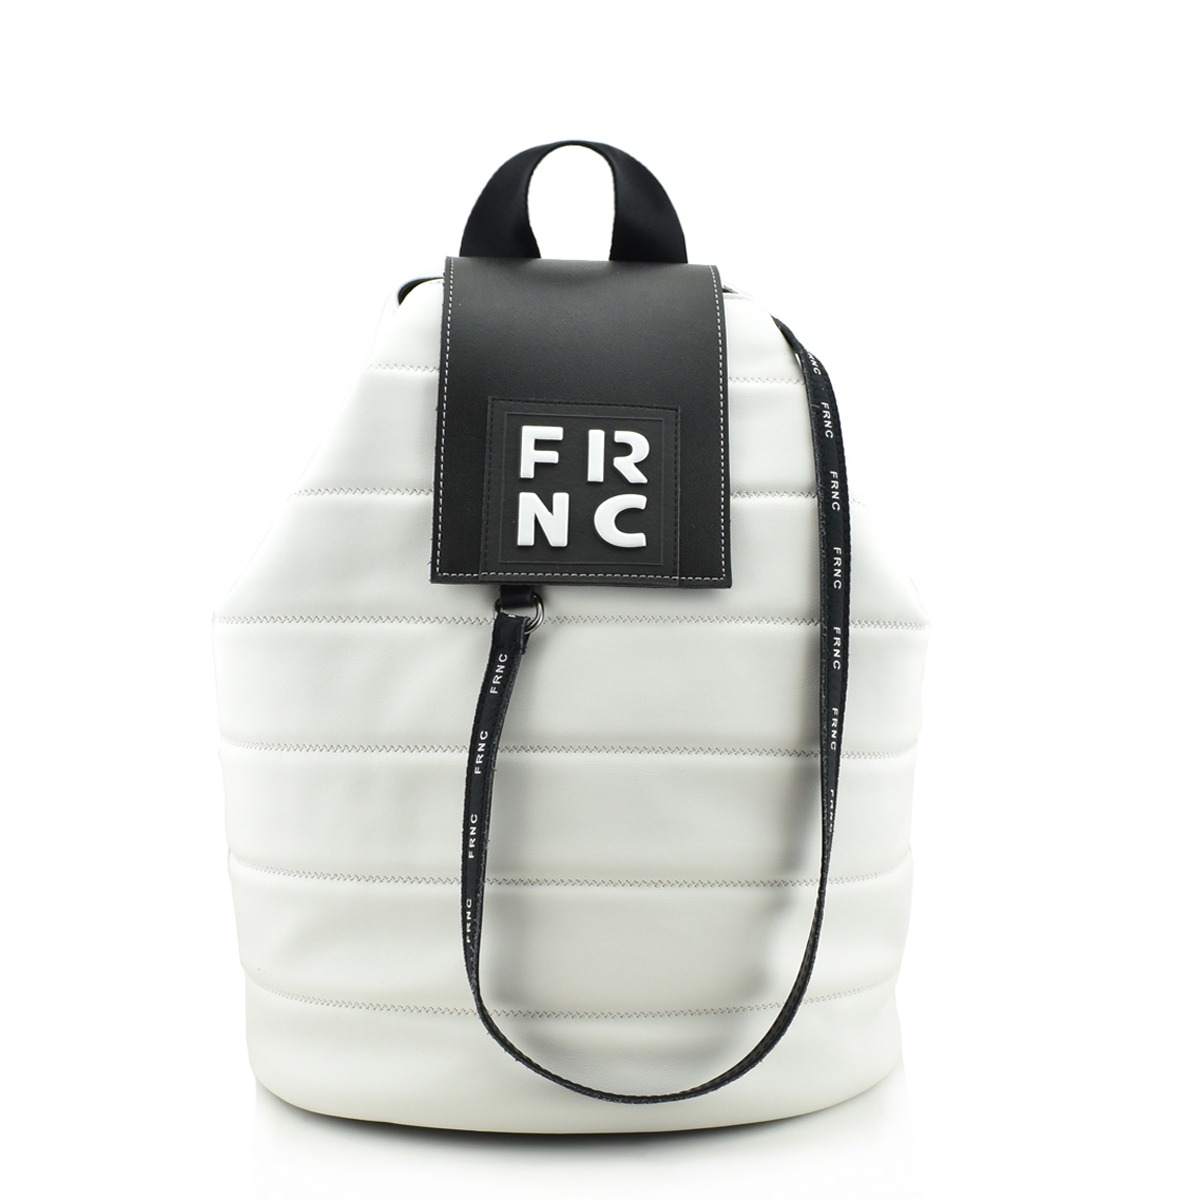 FRNC - FRANCESCO BIG POUCH BACKPACK - 2135 WHITE LOGO